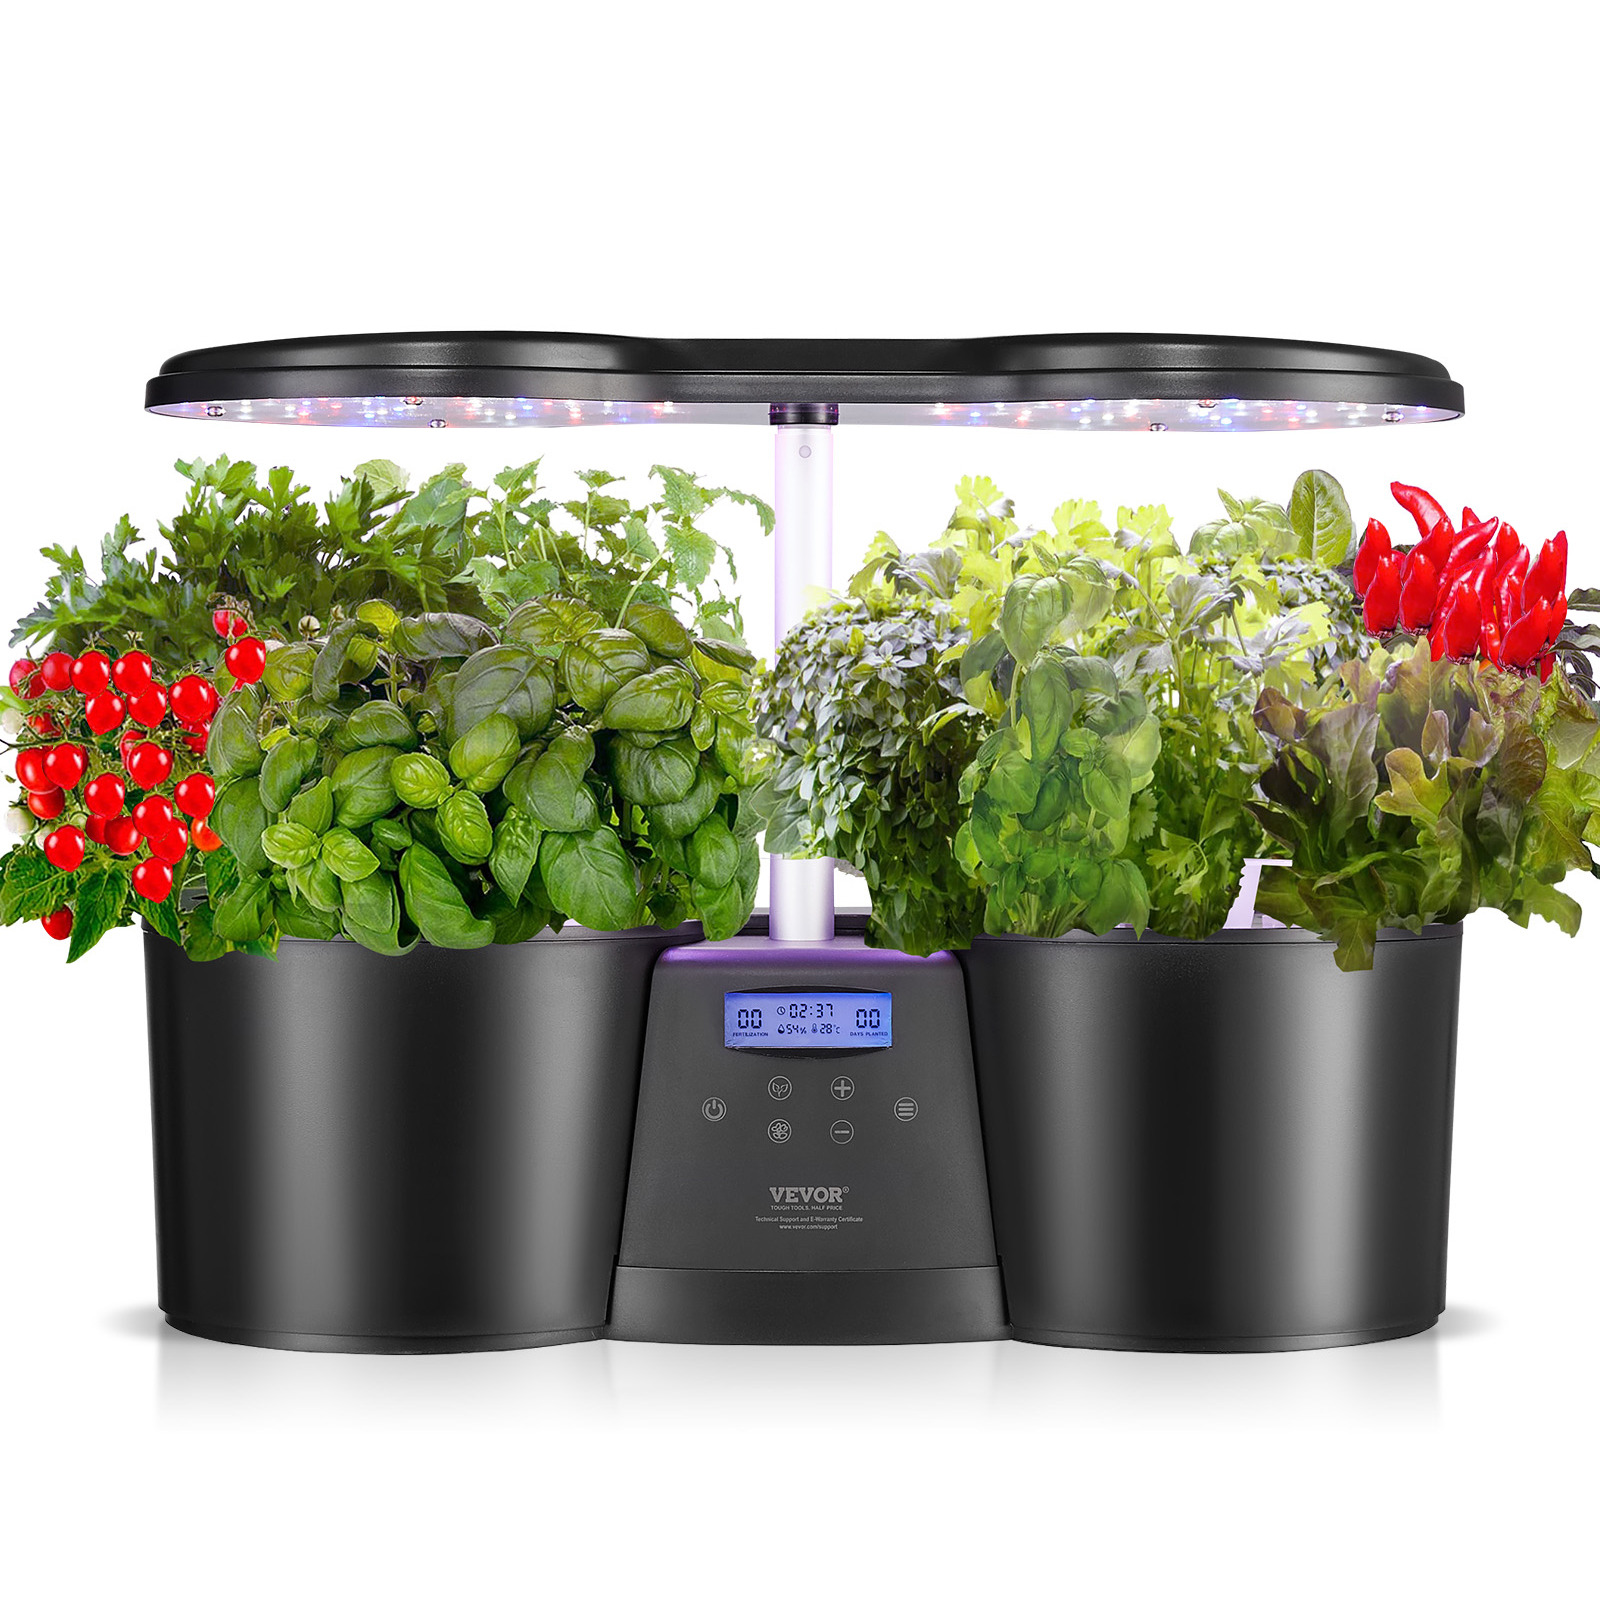 VEVOR Hydroponics Growing System 12 Pods Indoor Growing System LED Grow Light